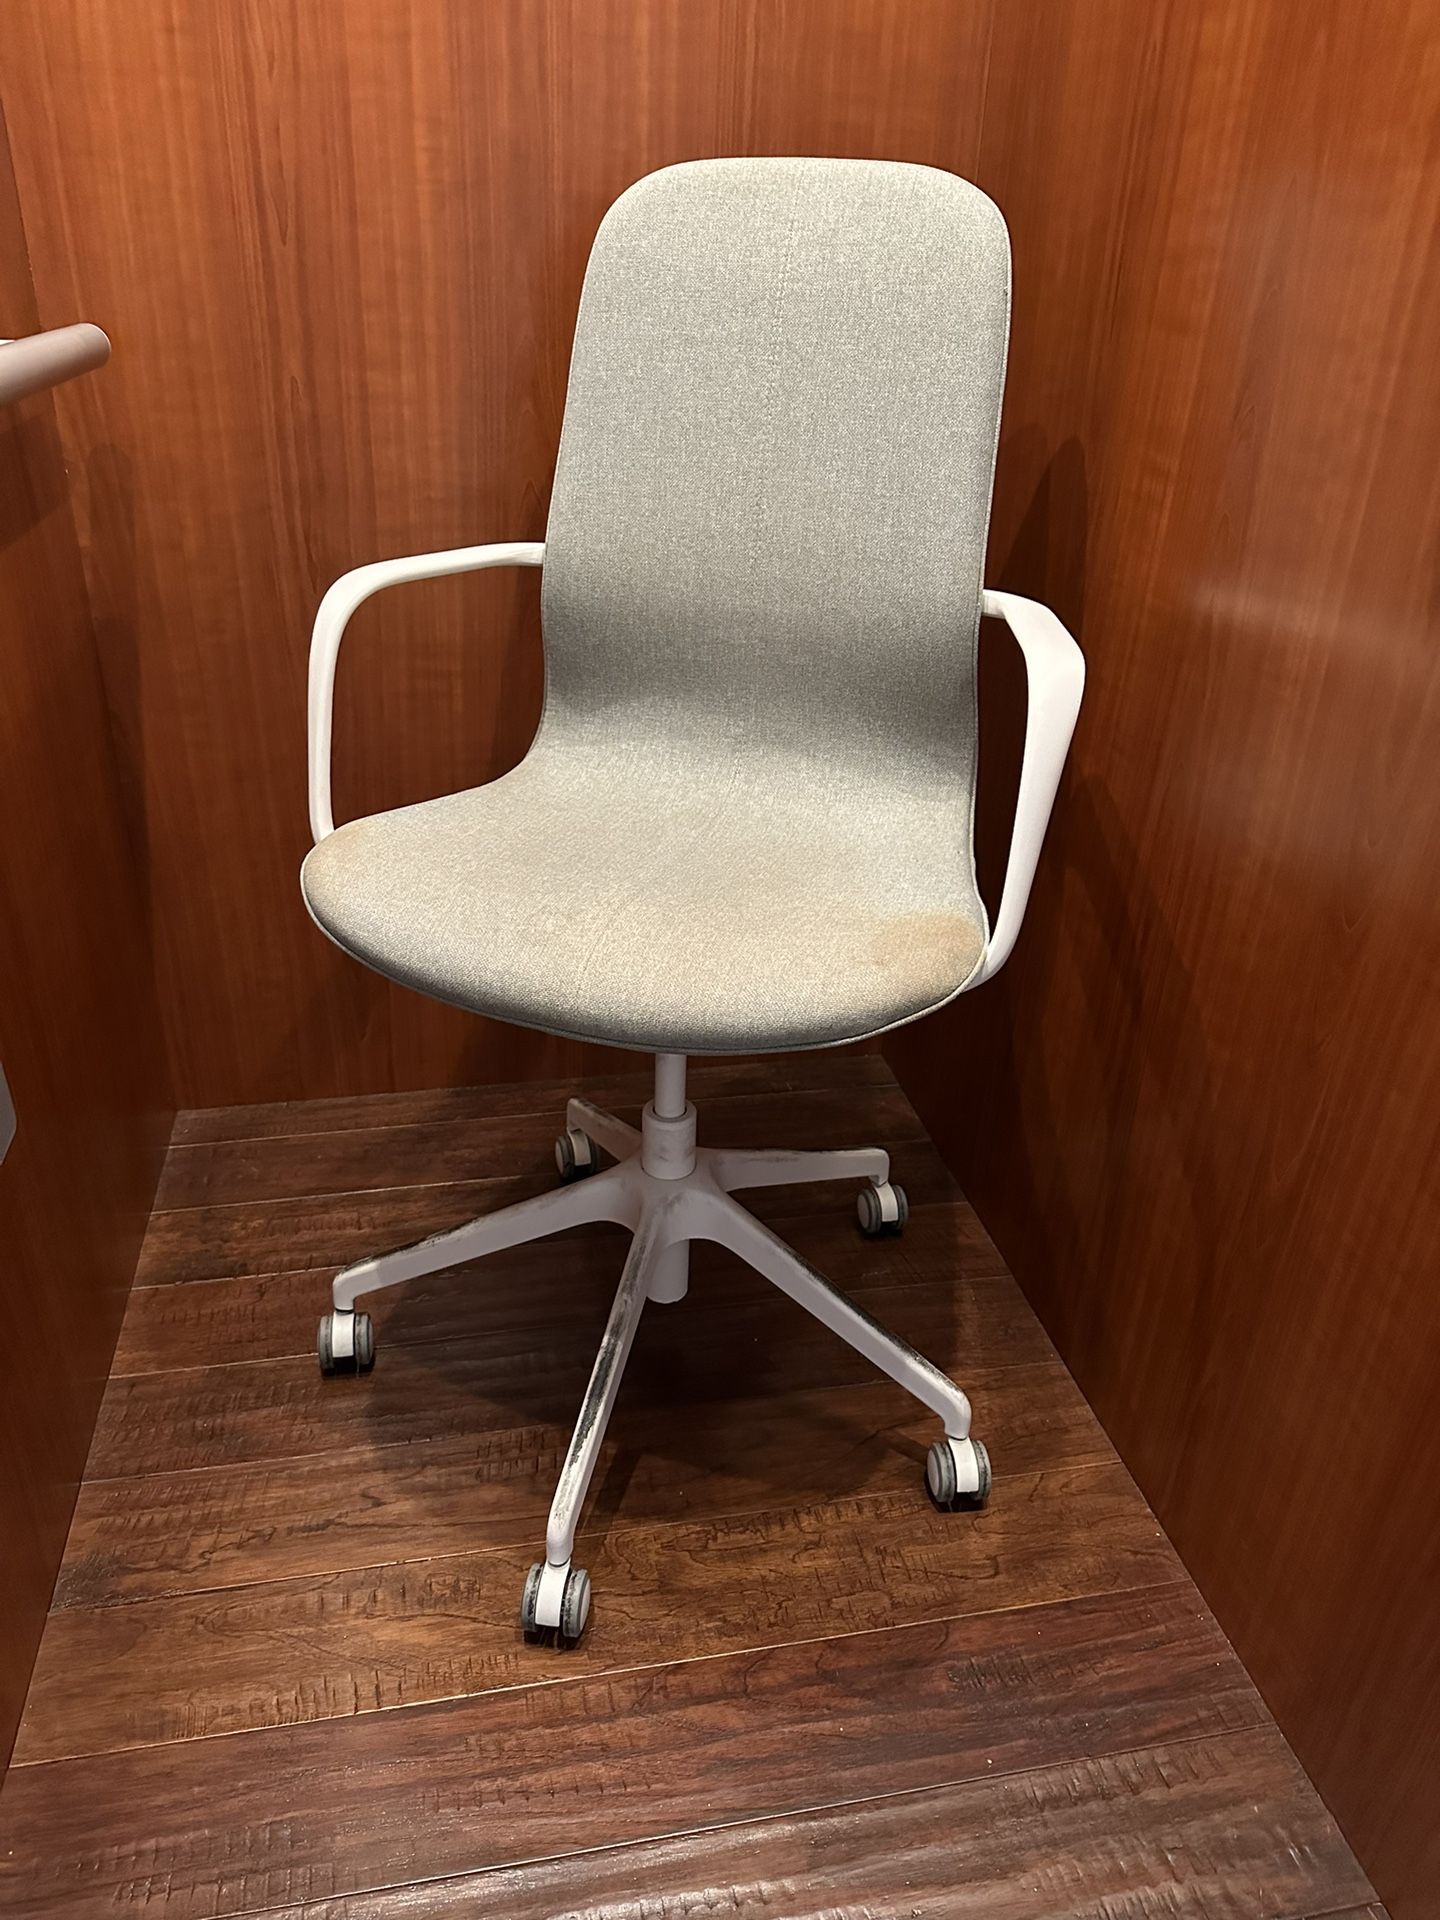 IKEA Office chair